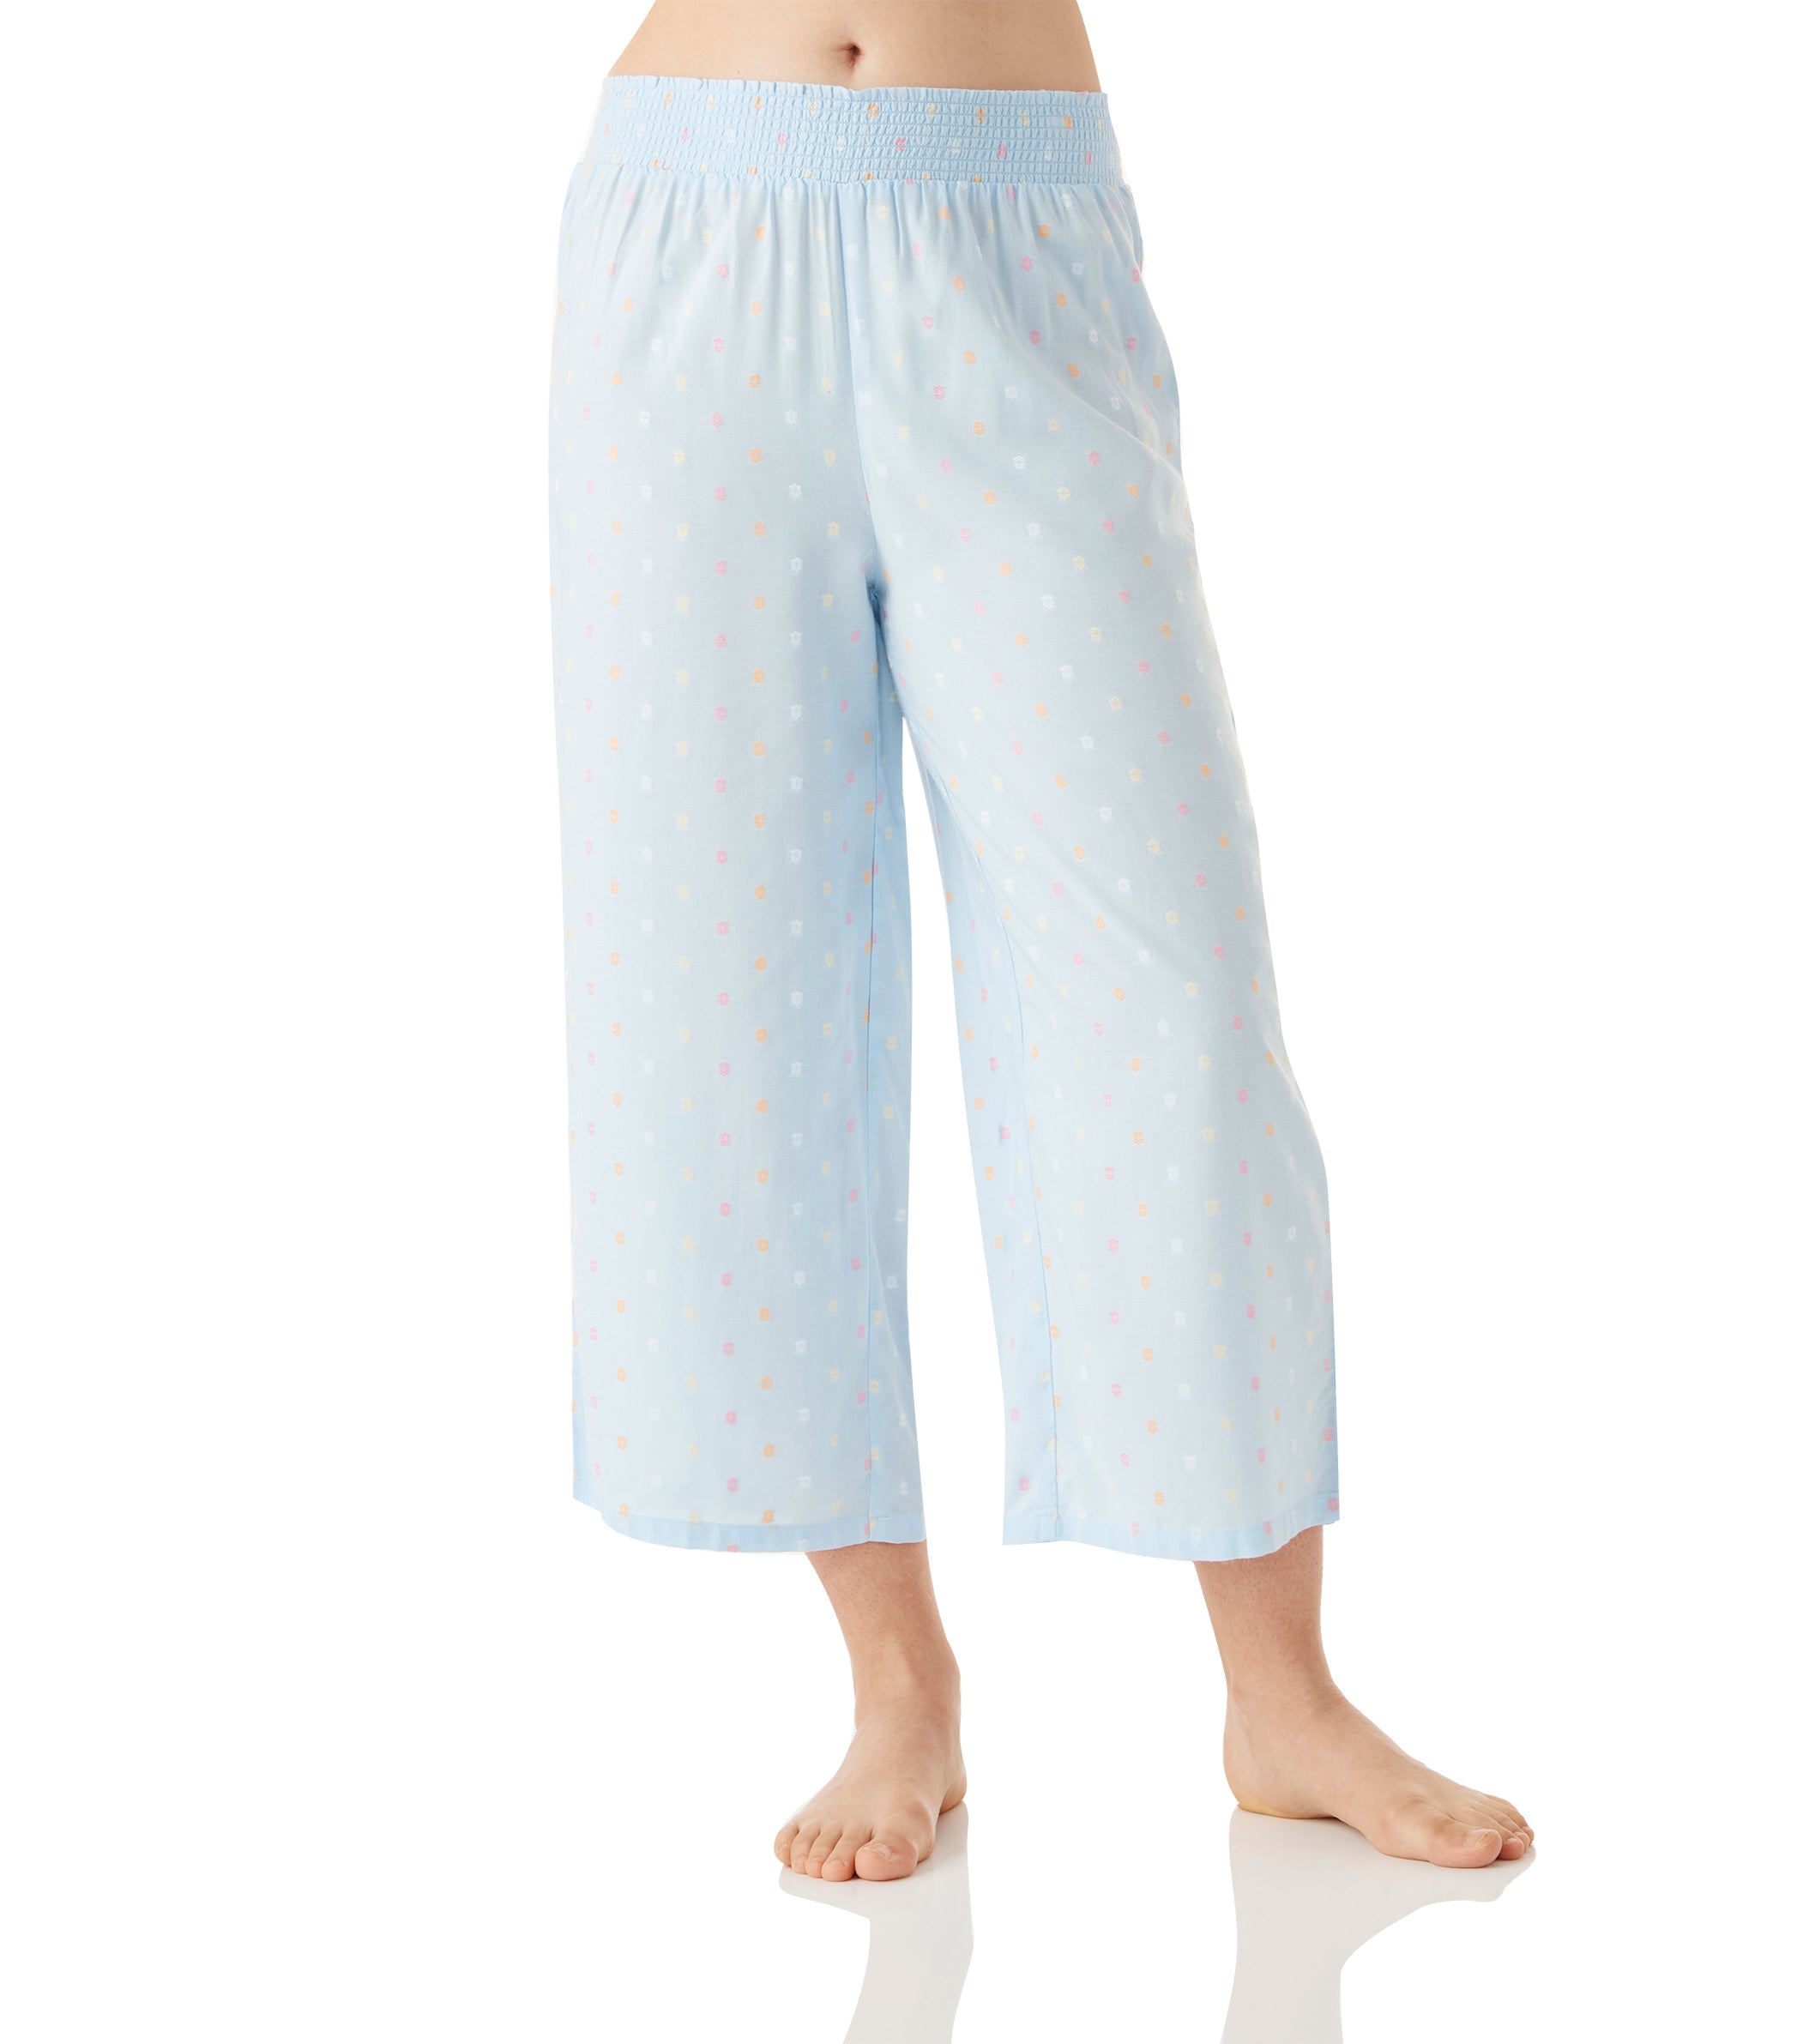 Women's Ivory Summer Linen Cami & 3/4 Pant Cotton Pyjama Set